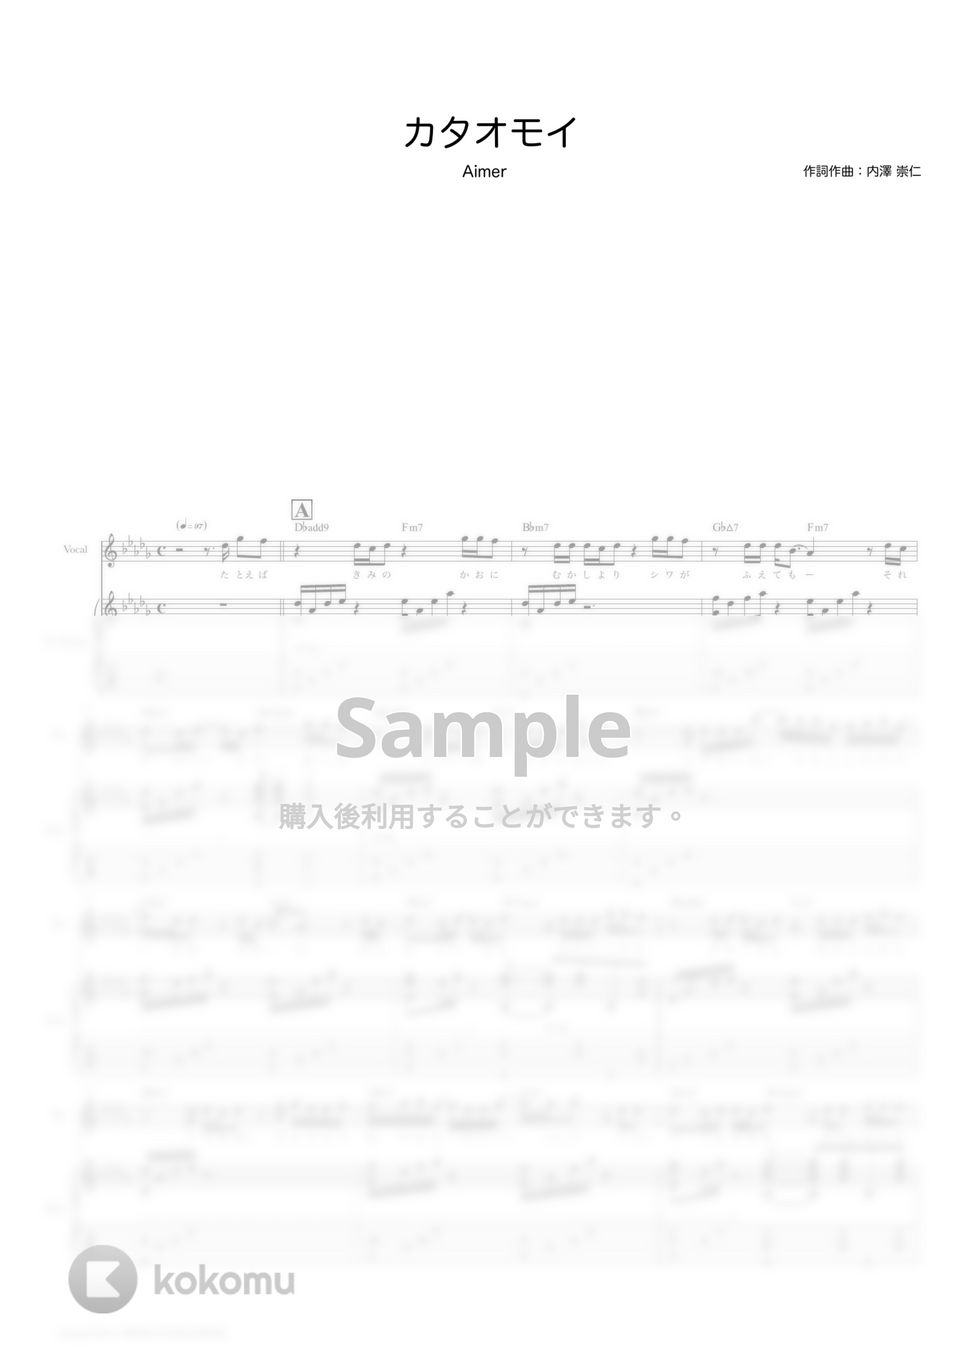 Aimer - カタオモイ (ギタースコア・歌詞・コード付き) by TRIAD GUITAR SCHOOL